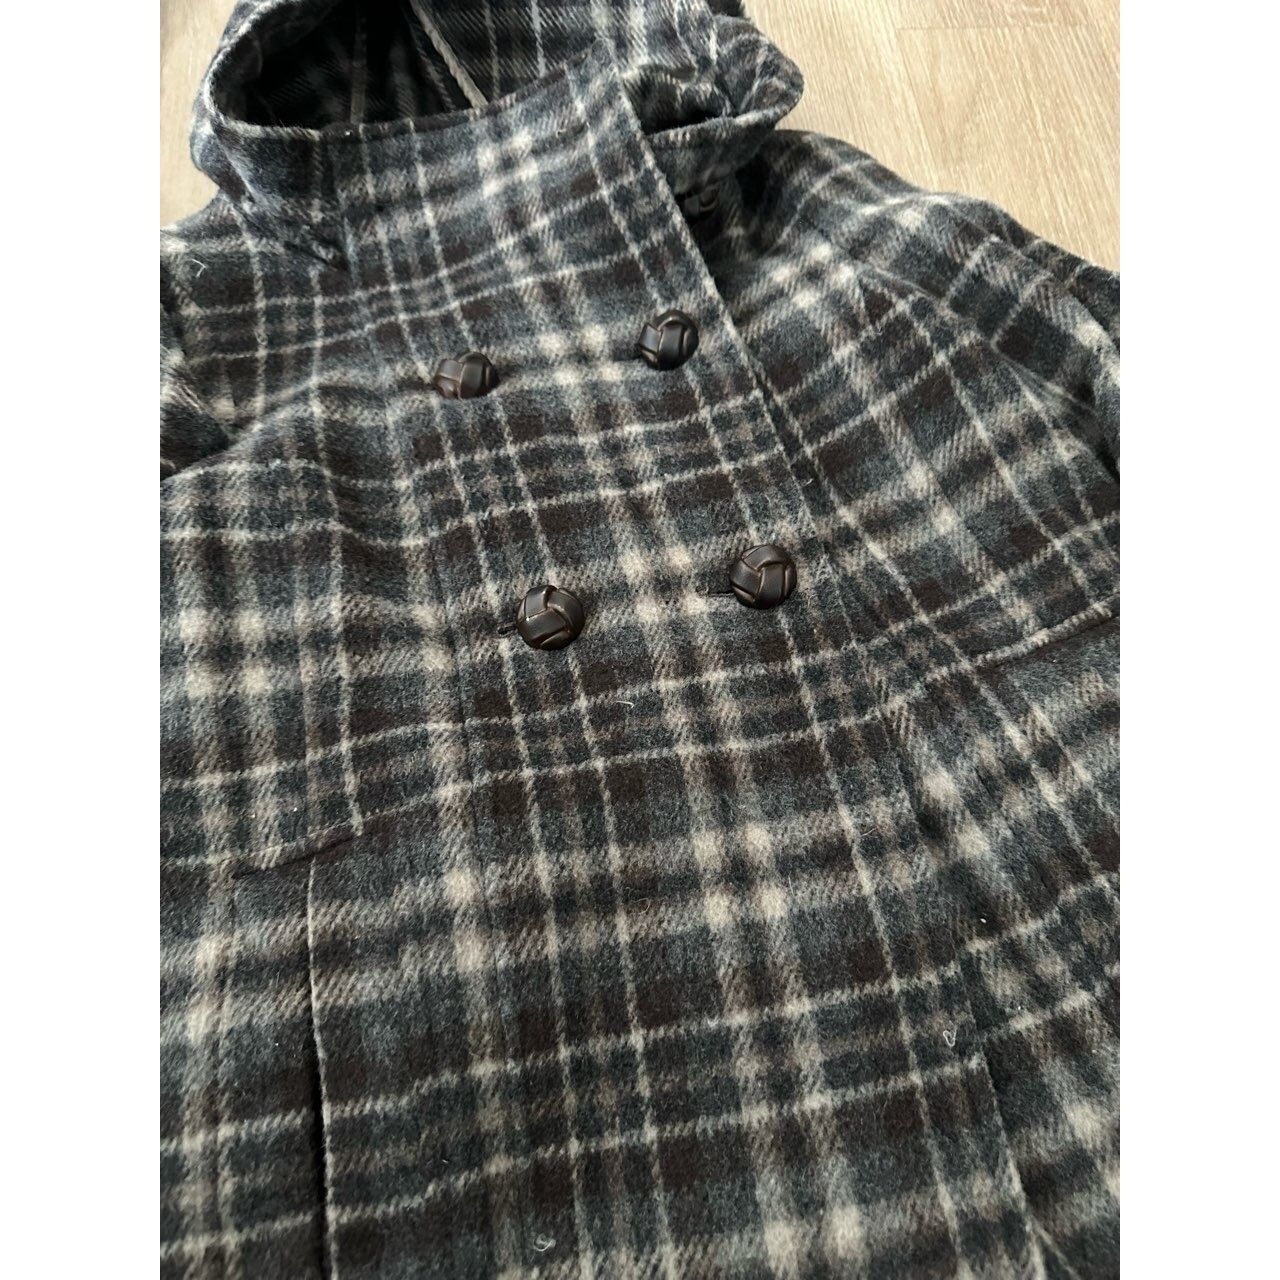 Zara Dark Grey Geometric Coat Wool Jacket Winter